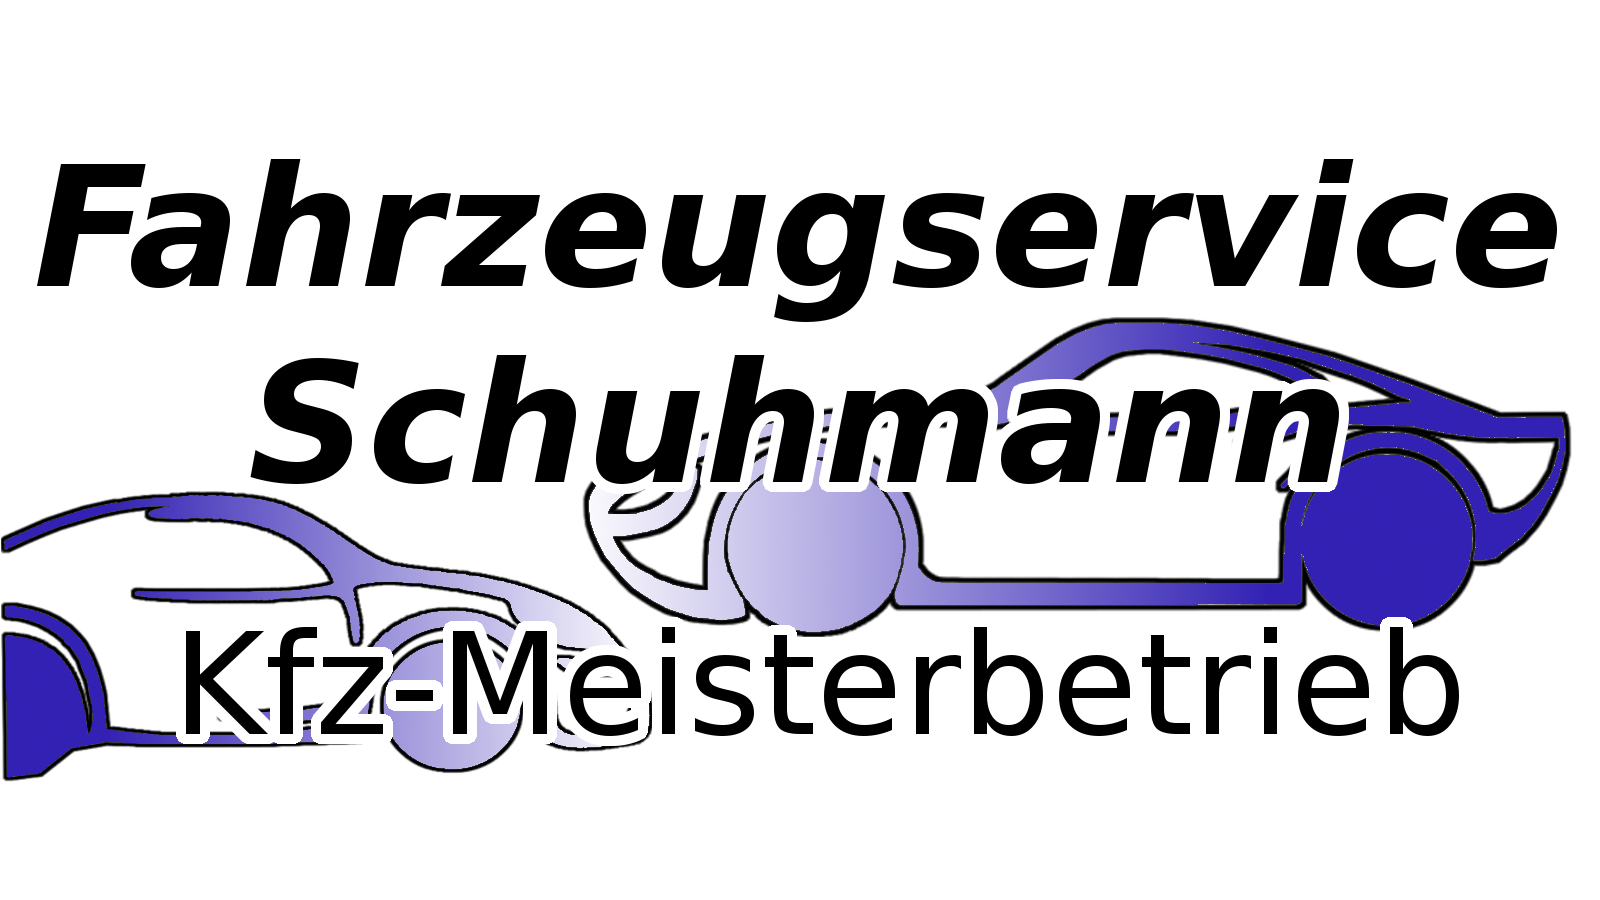 Fahrzeugservice Schuhmann logo